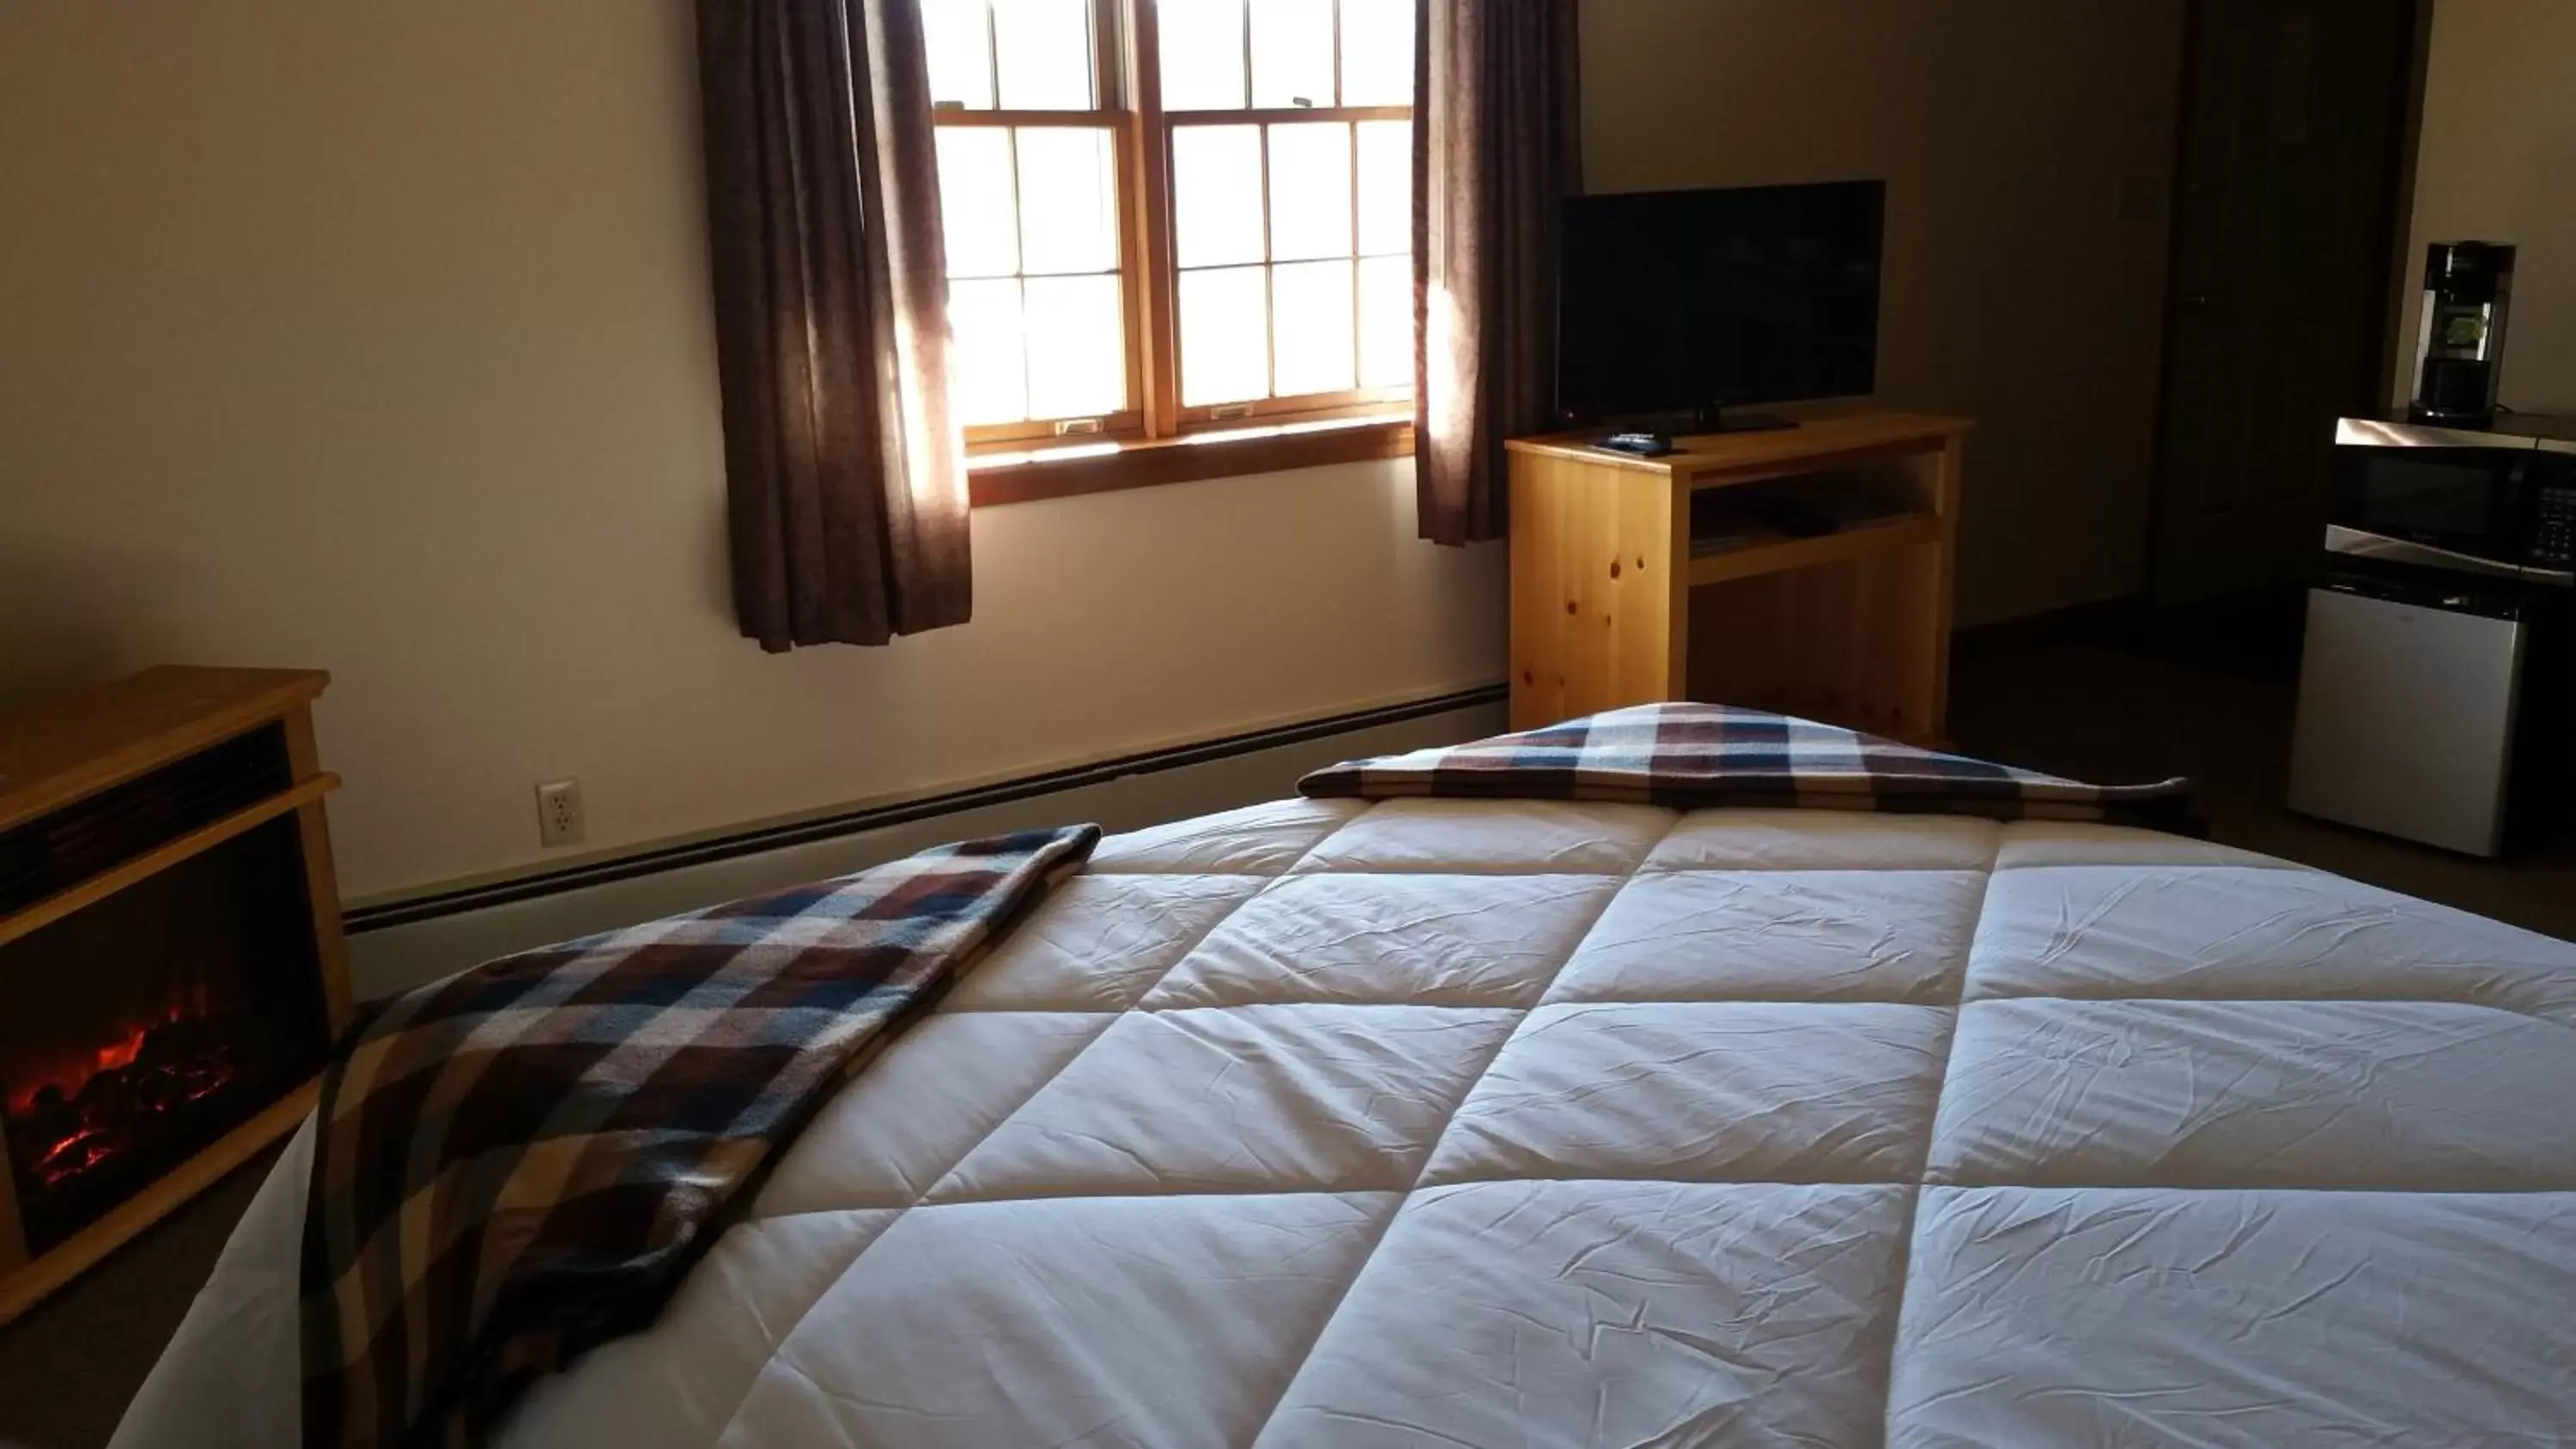 Bed in Spillover Motel and Inn